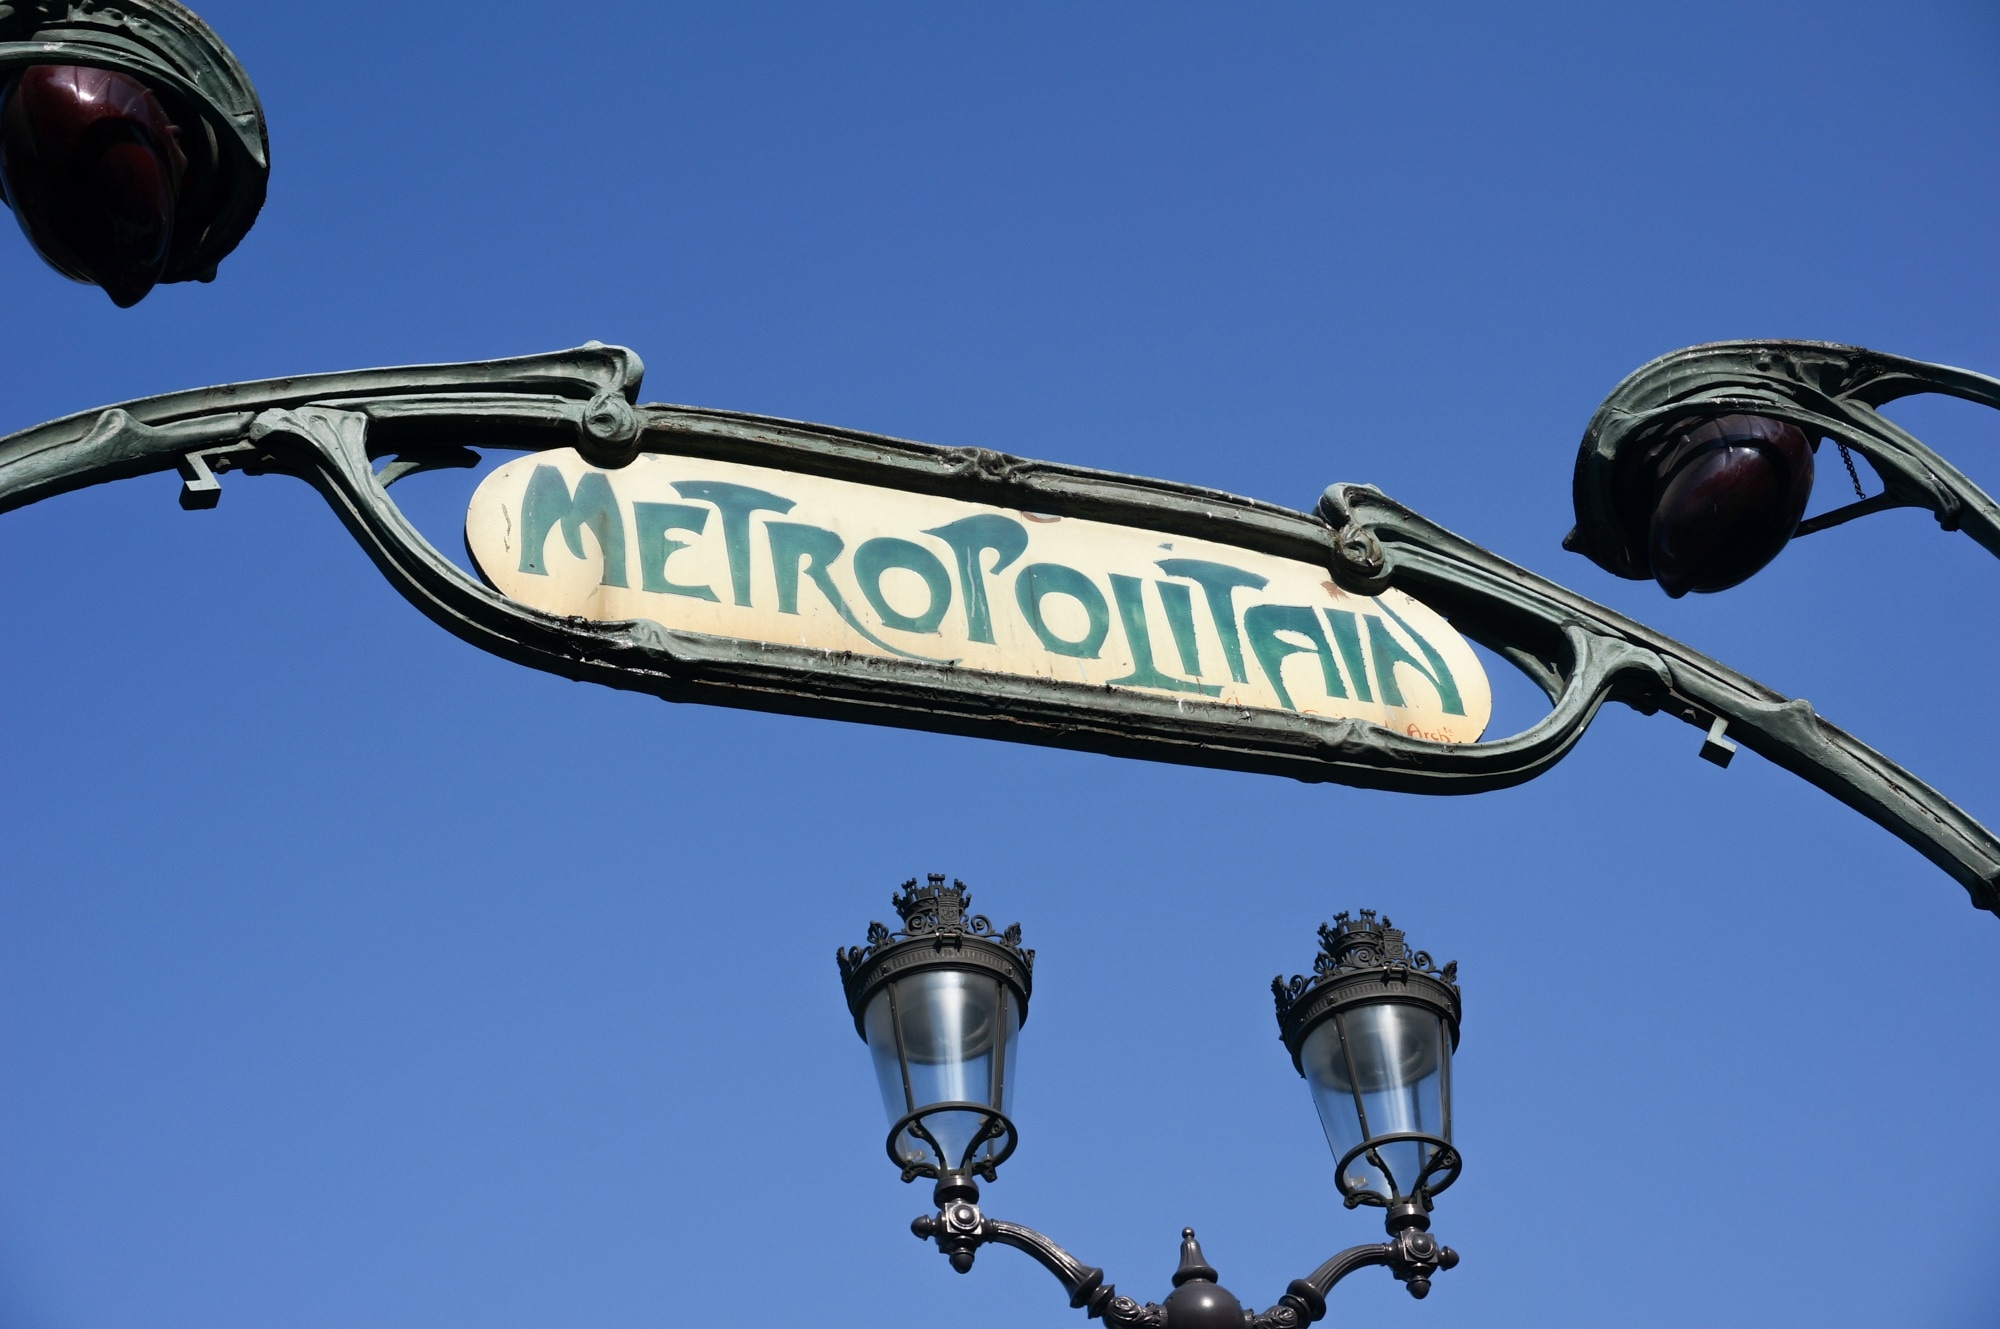 grey metal metropolitan signage